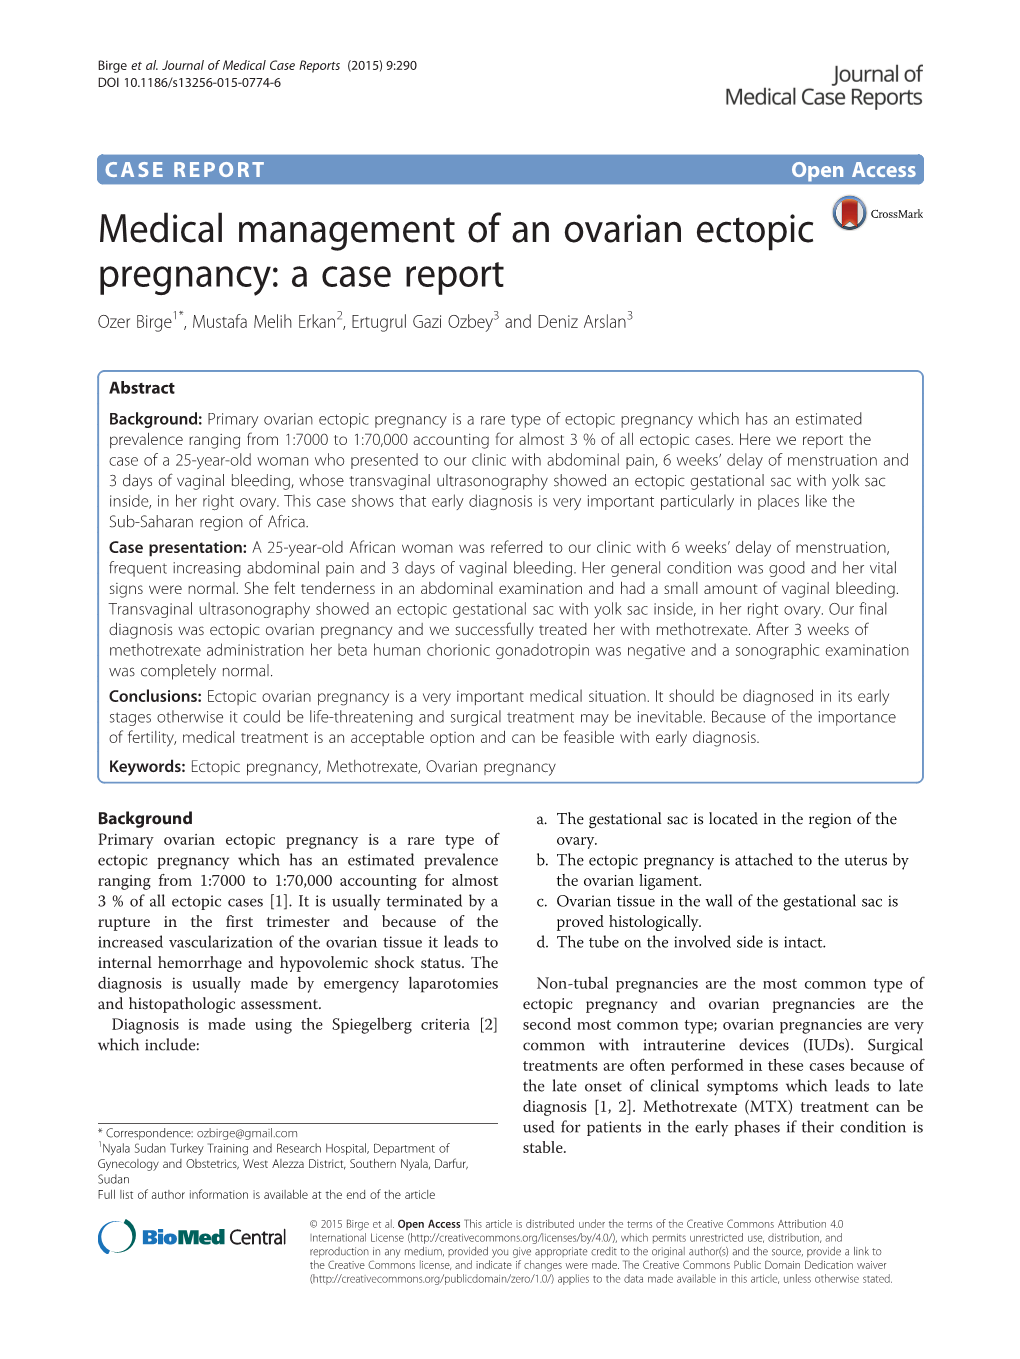 Medical Management of an Ovarian Ectopic Pregnancy: a Case Report Ozer Birge1*, Mustafa Melih Erkan2, Ertugrul Gazi Ozbey3 and Deniz Arslan3